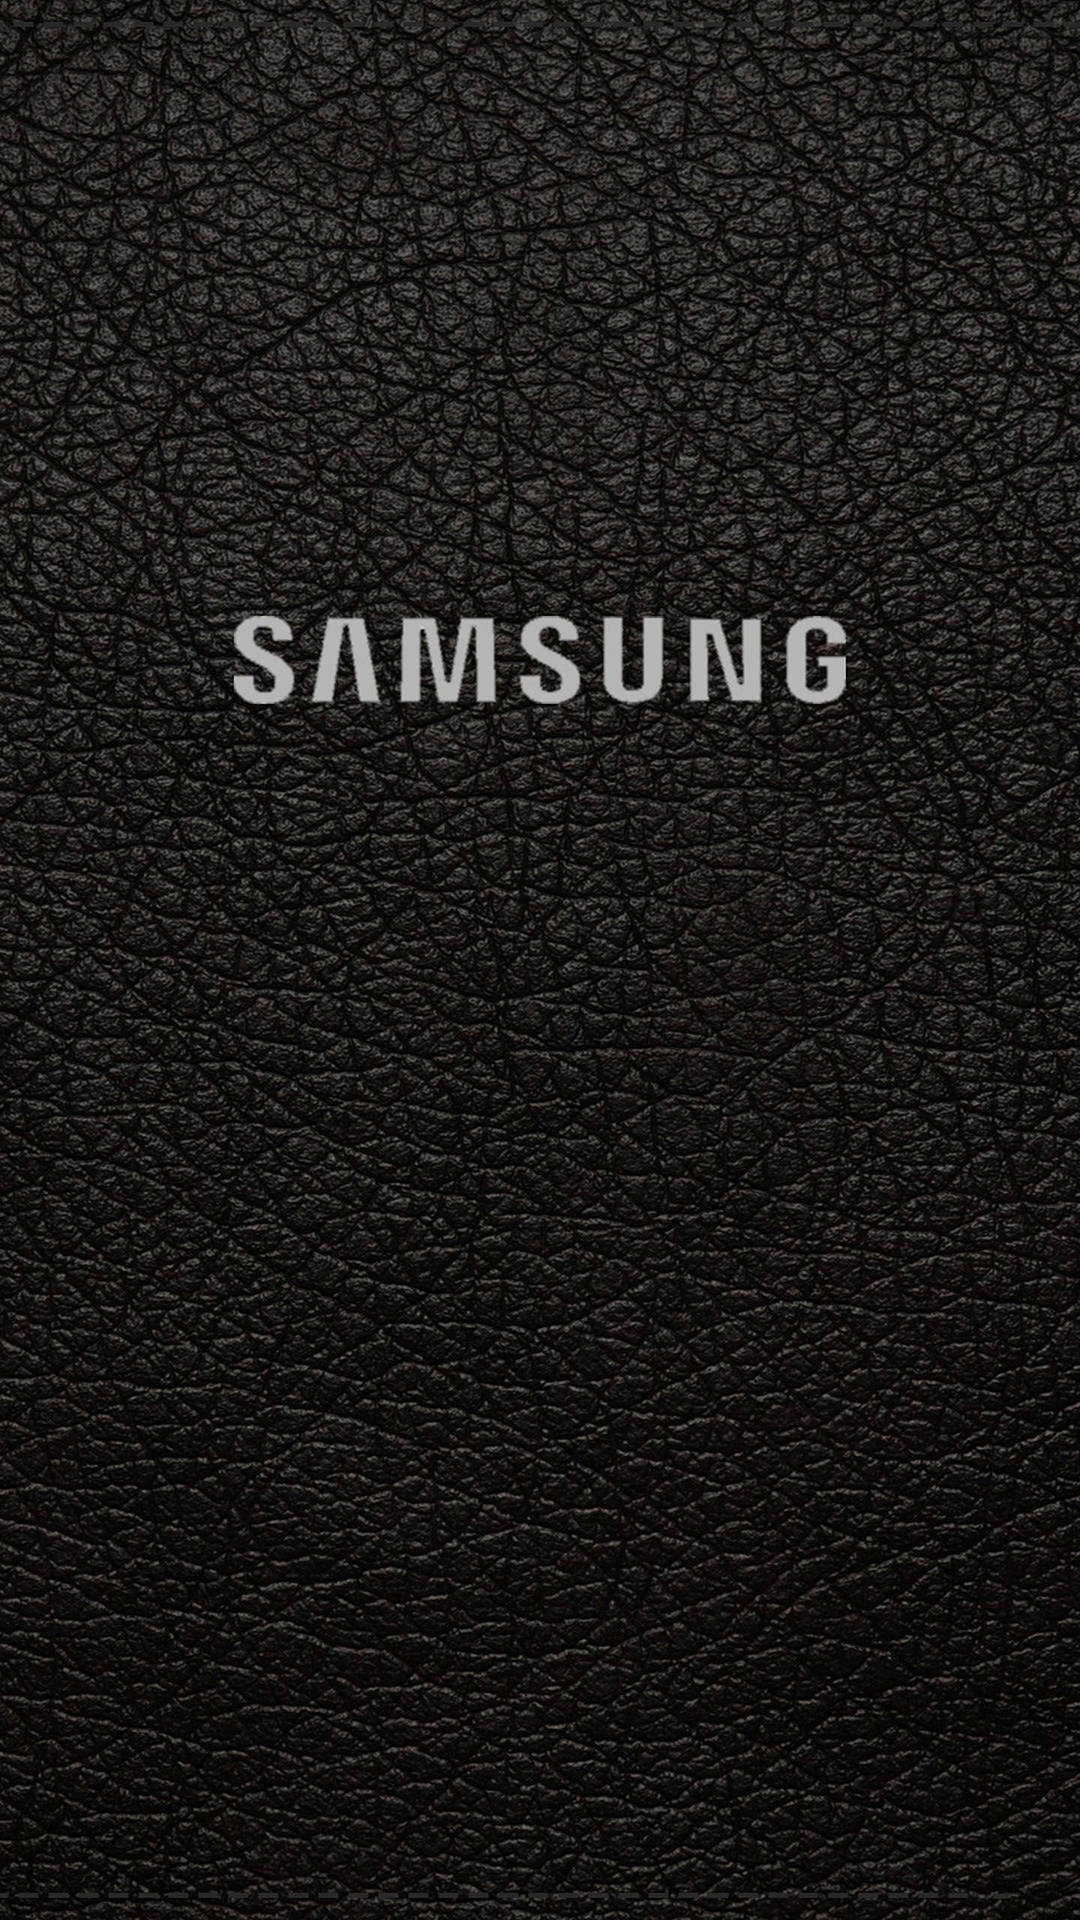 Samsung Mobile Logo On Leather Background